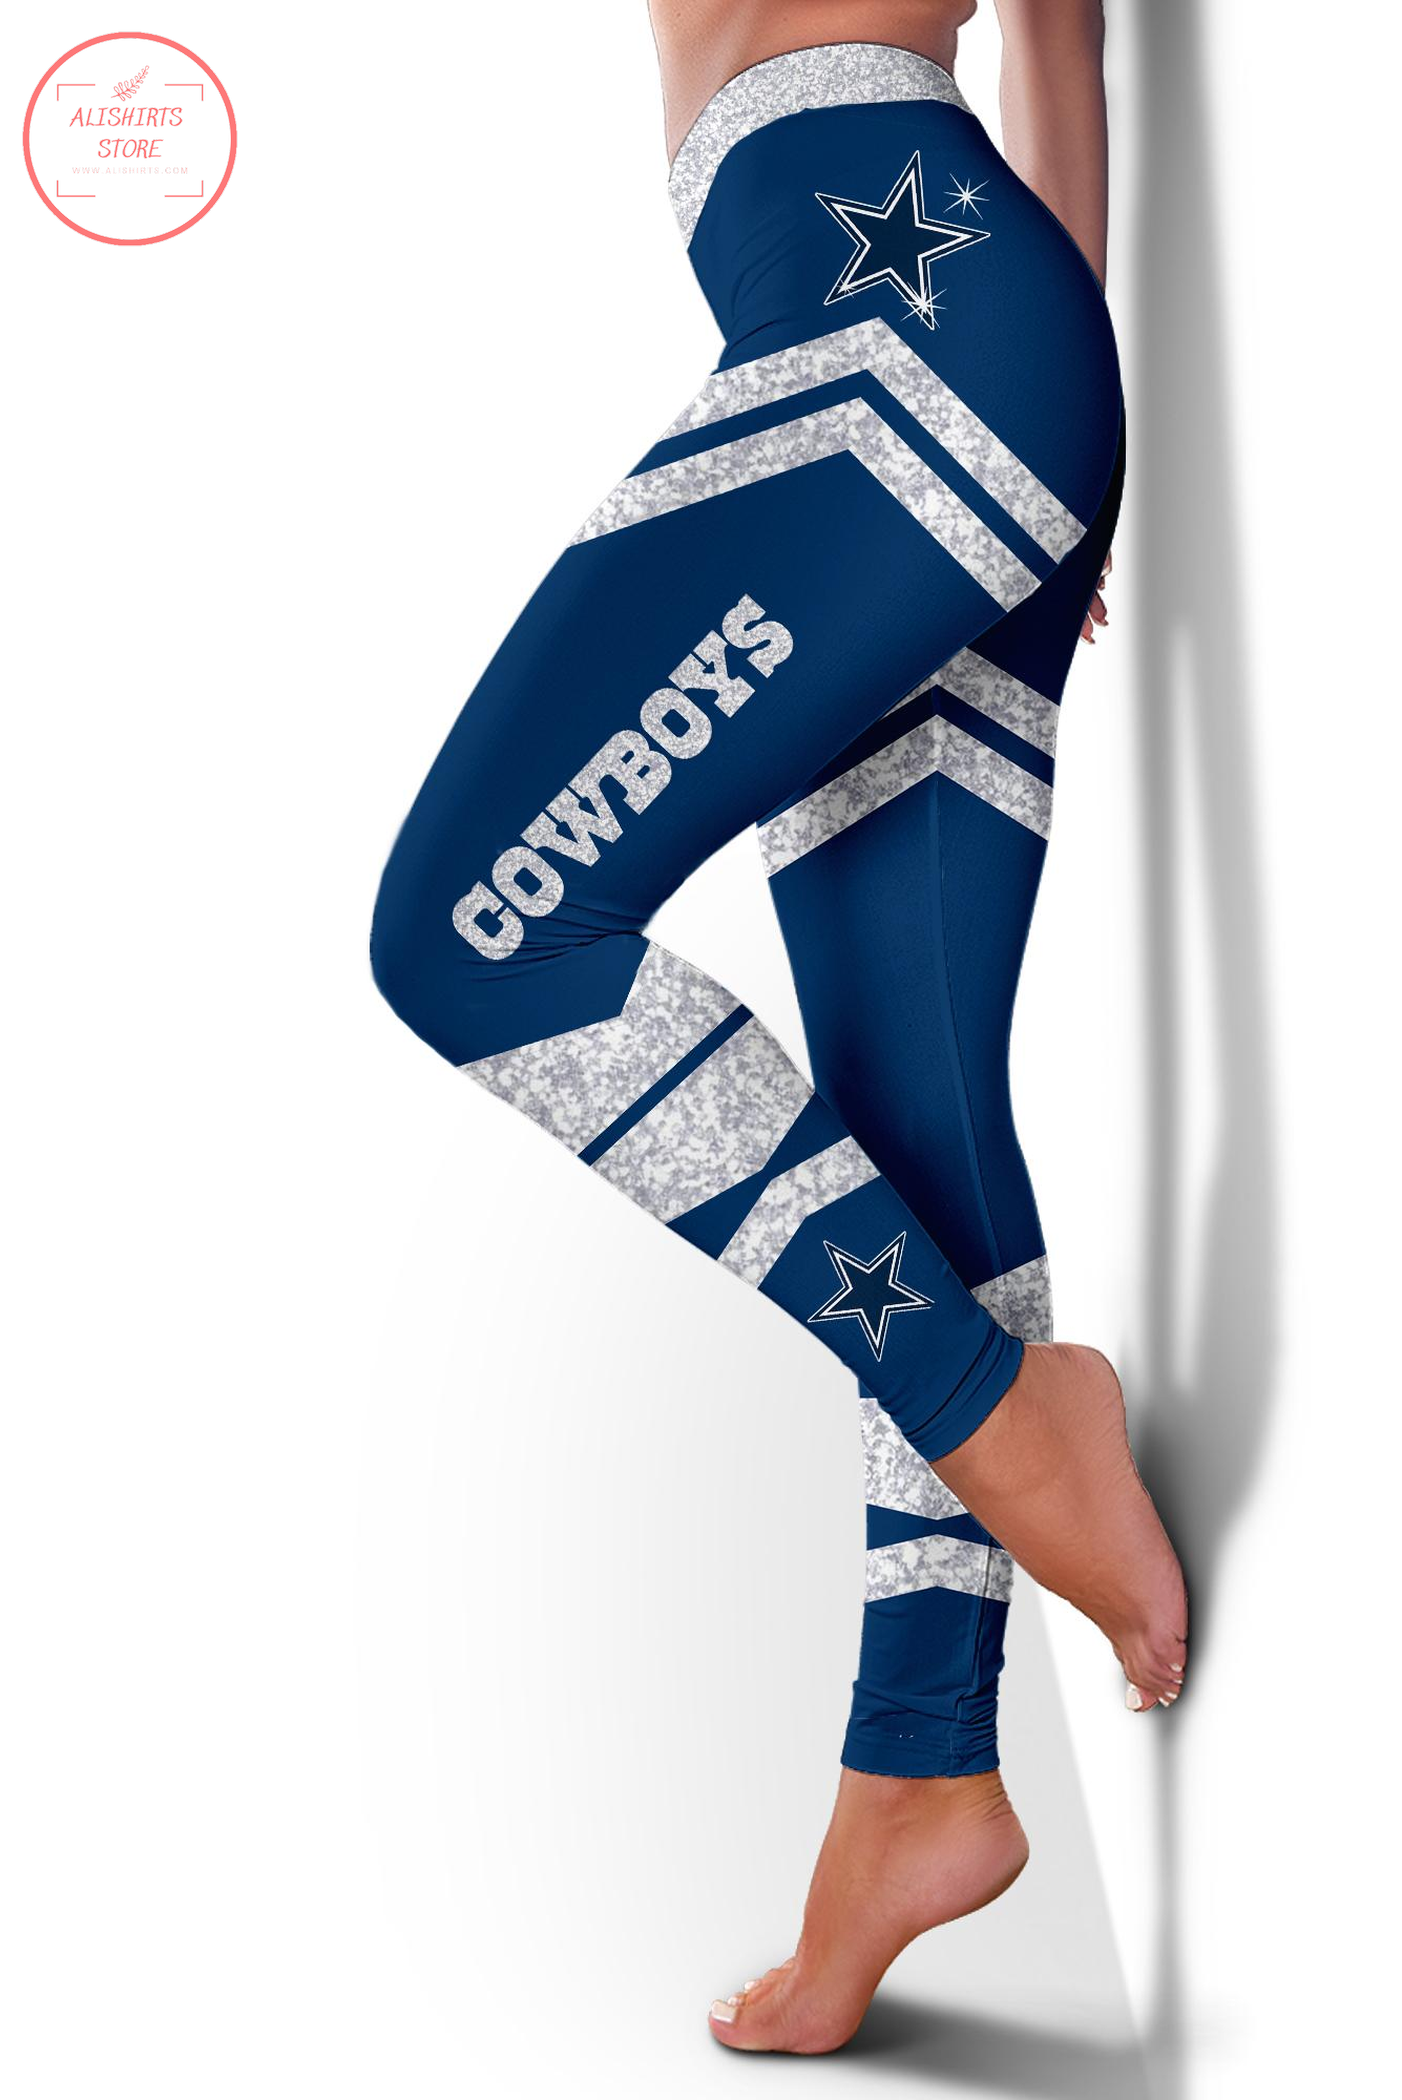 Dallas Cowboys leggings